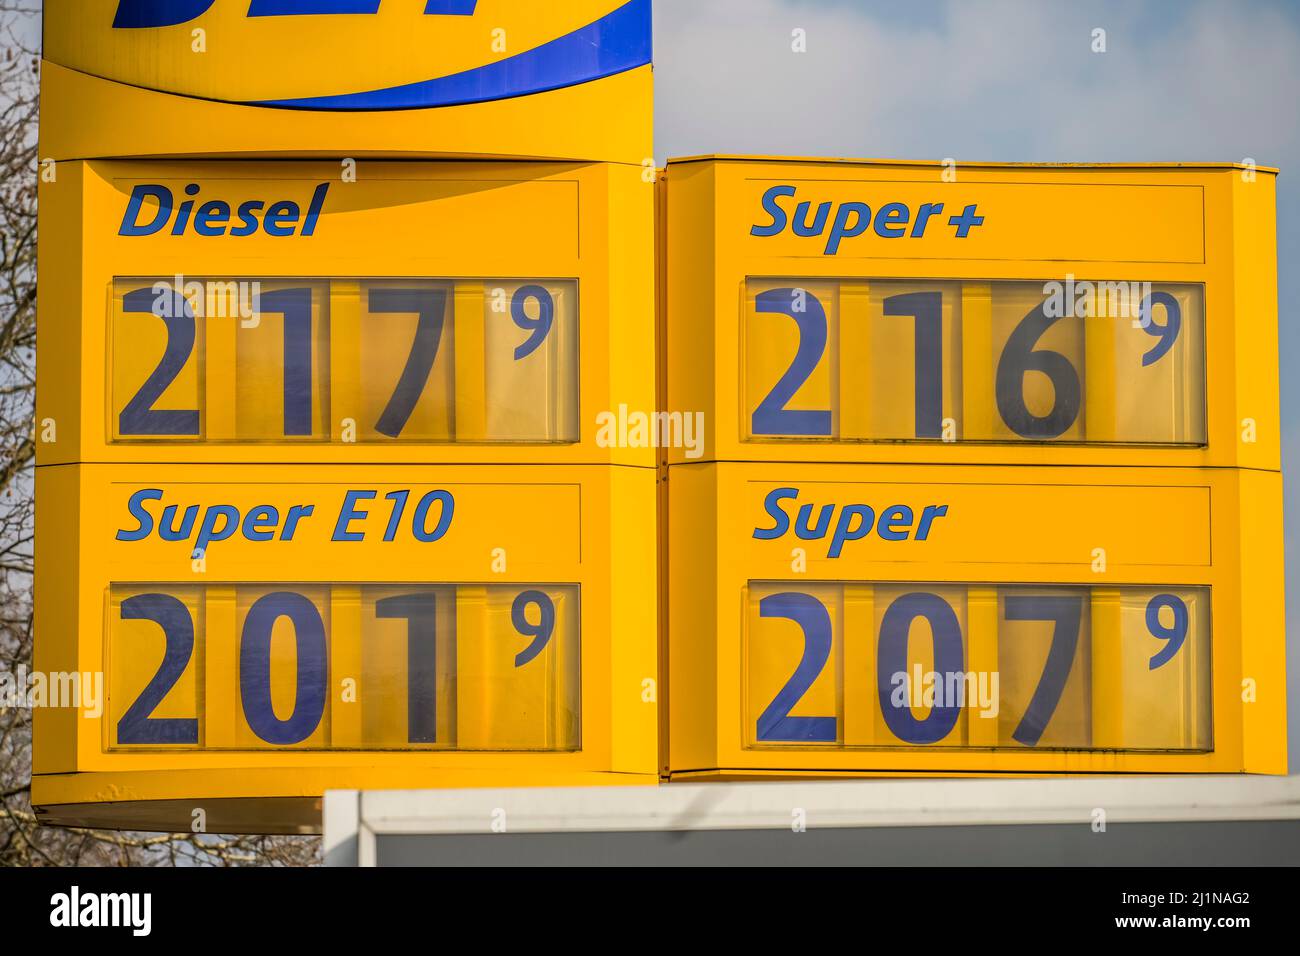 Benzinpreise, Jet Tankstelle, Berlin, Deutschland Stock Photo